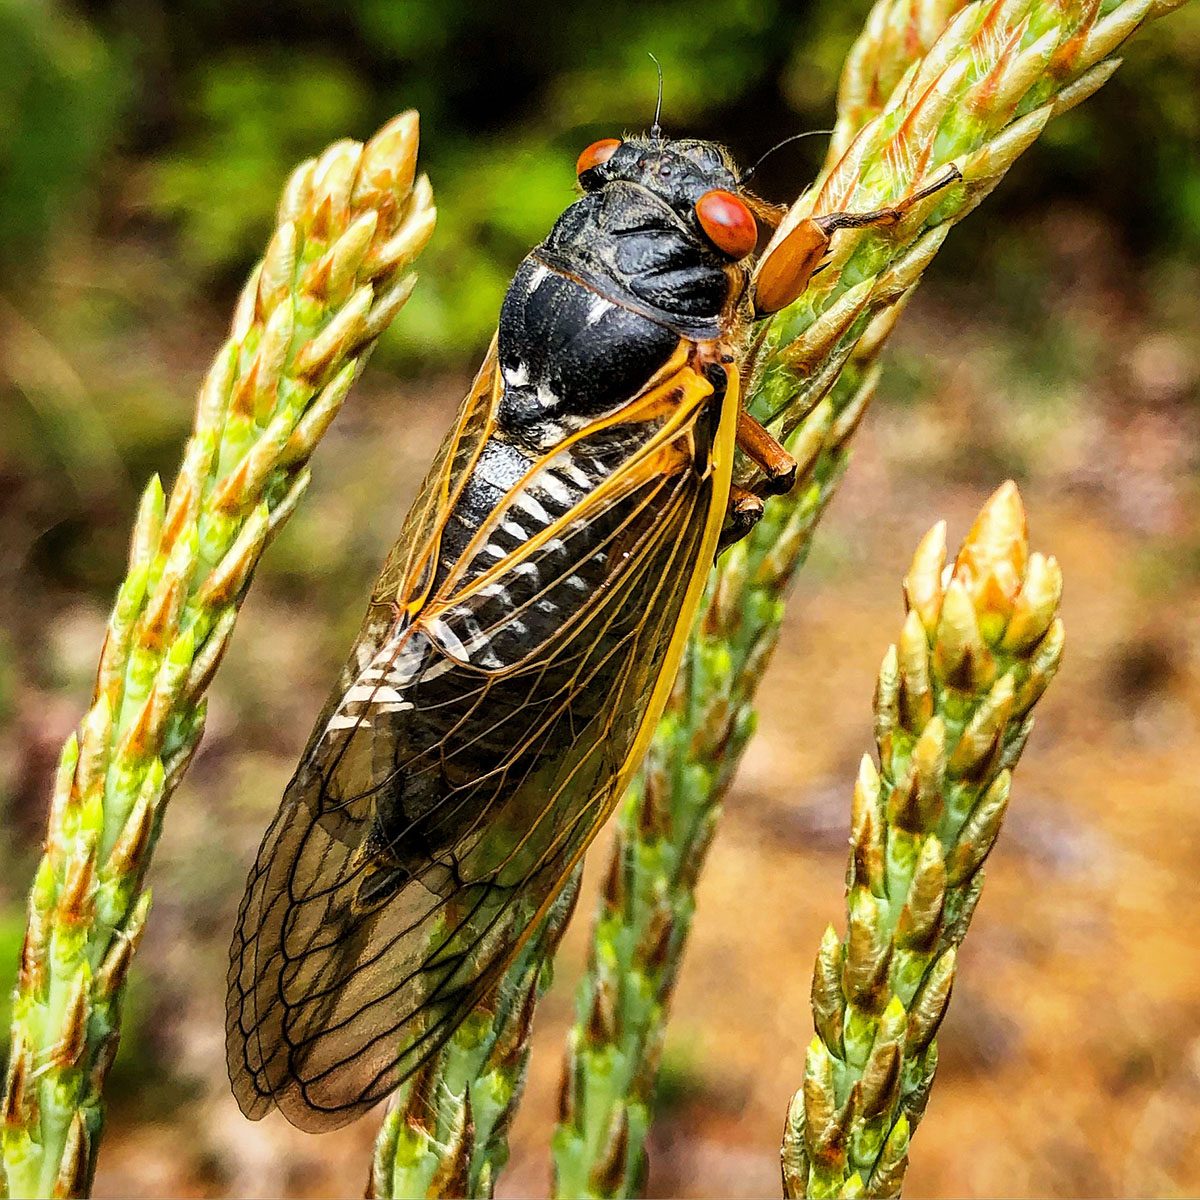 Cicada on plant